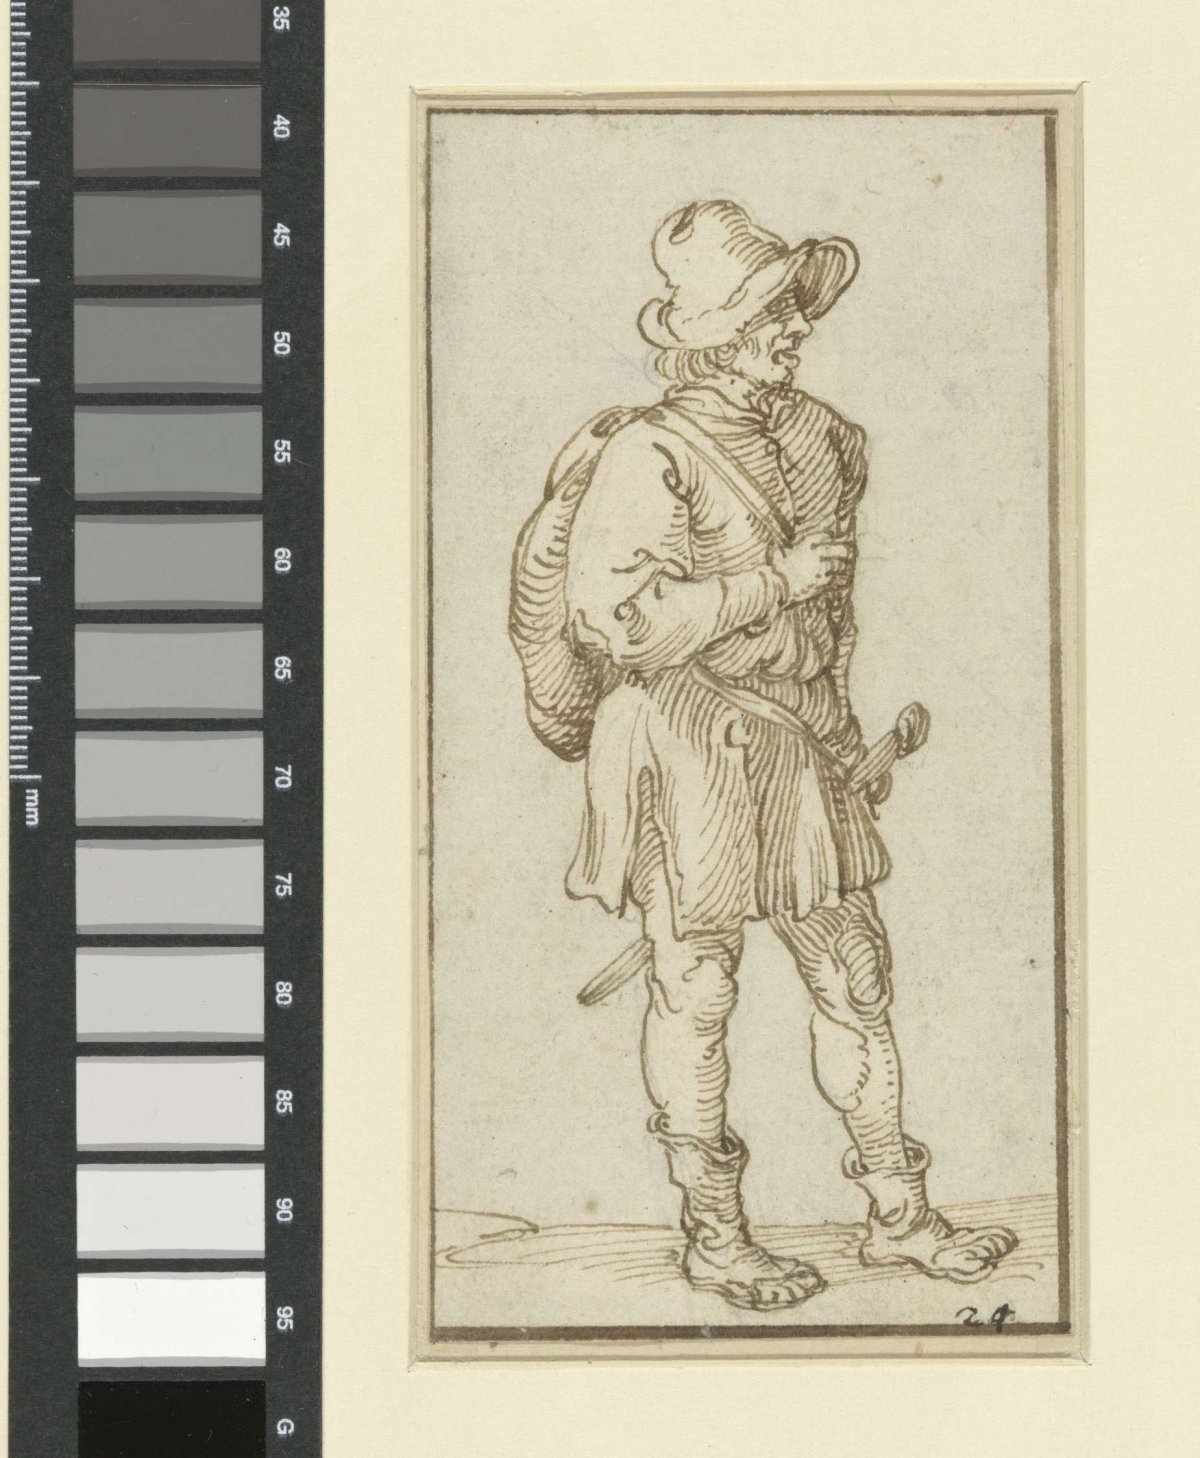 Standing man with backpack and a sword, Hans Sebald Beham, 1510 - 1550